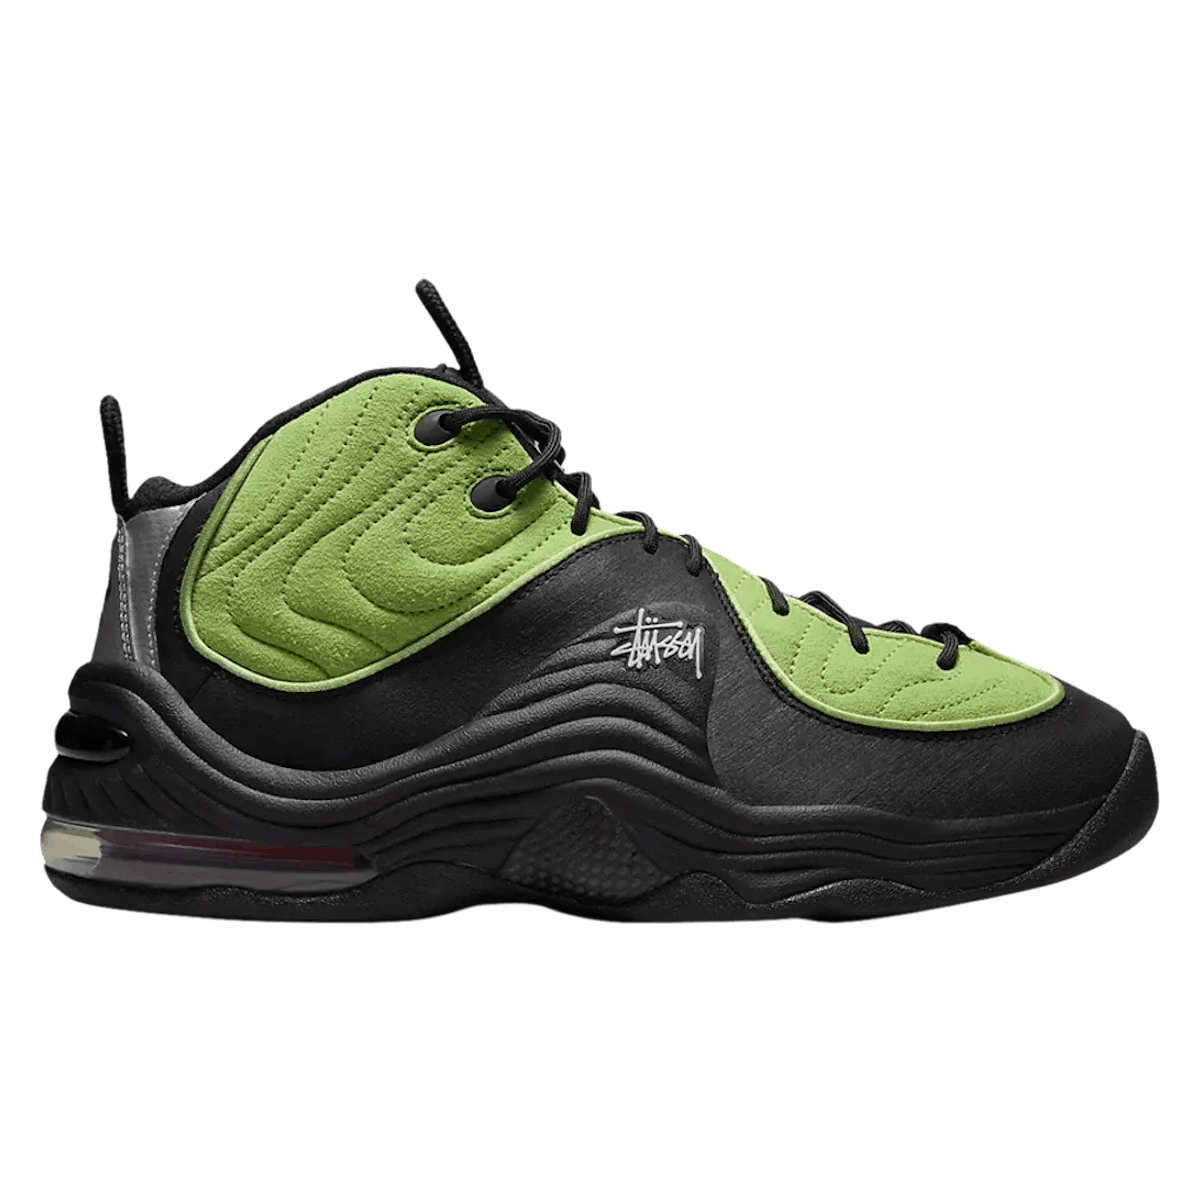 Stussy x Nike Air Penny 2 "Green Flash"